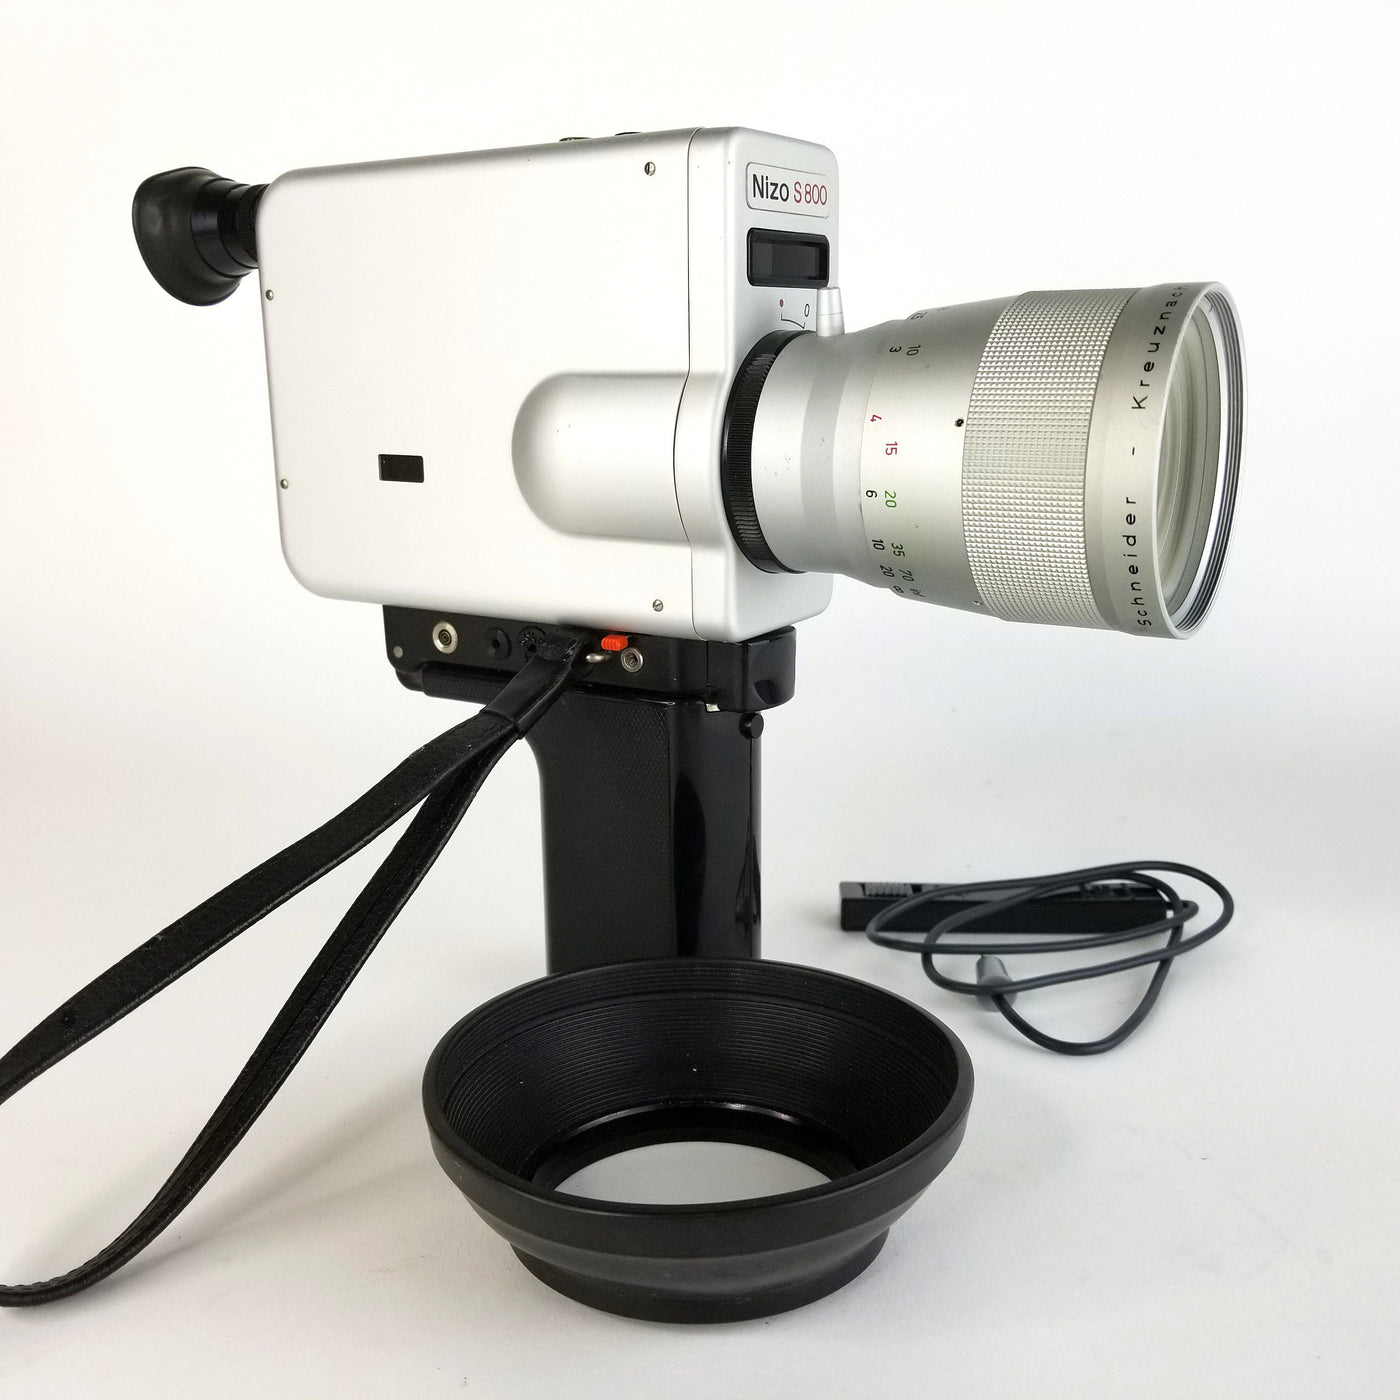 Nizo S800 Professionally Serviced and fully Functioning Super 8 Cameras Braun Nizo 